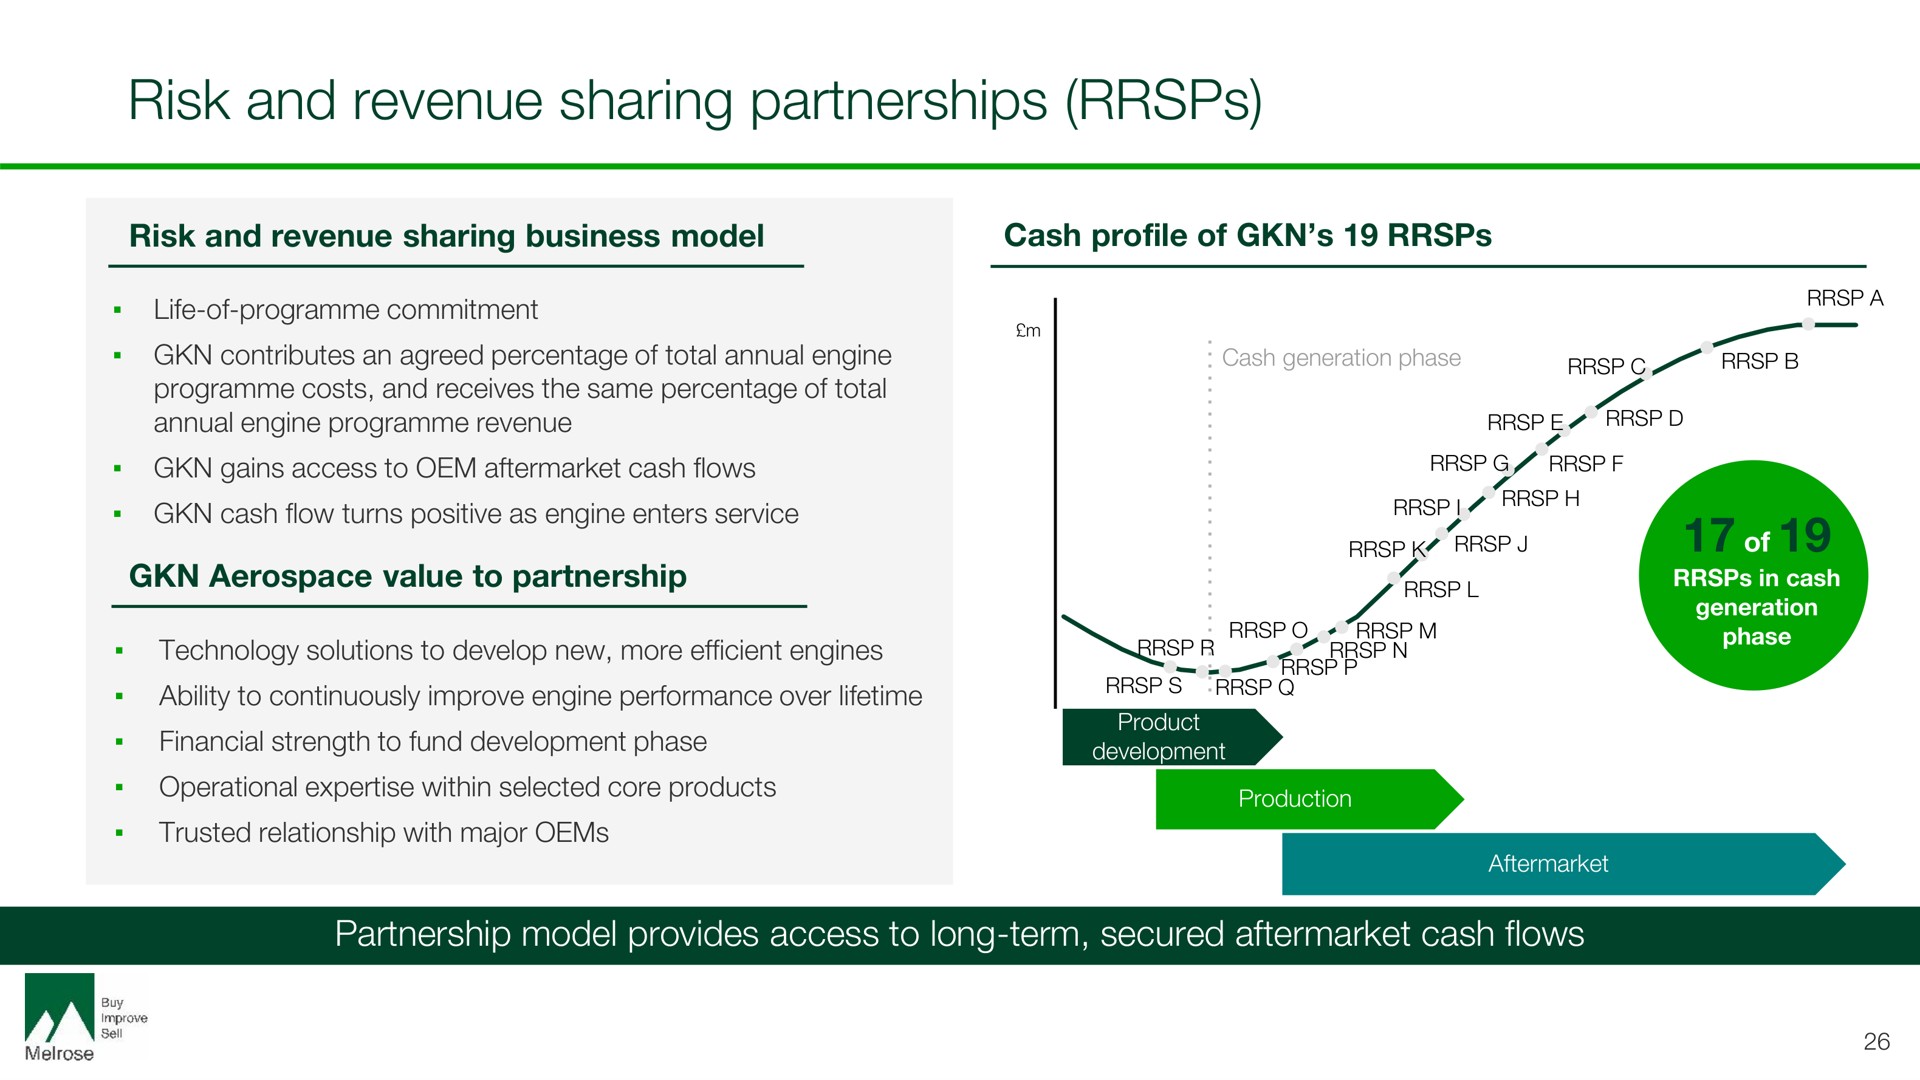 risk and revenue sharing partnerships | Melrose